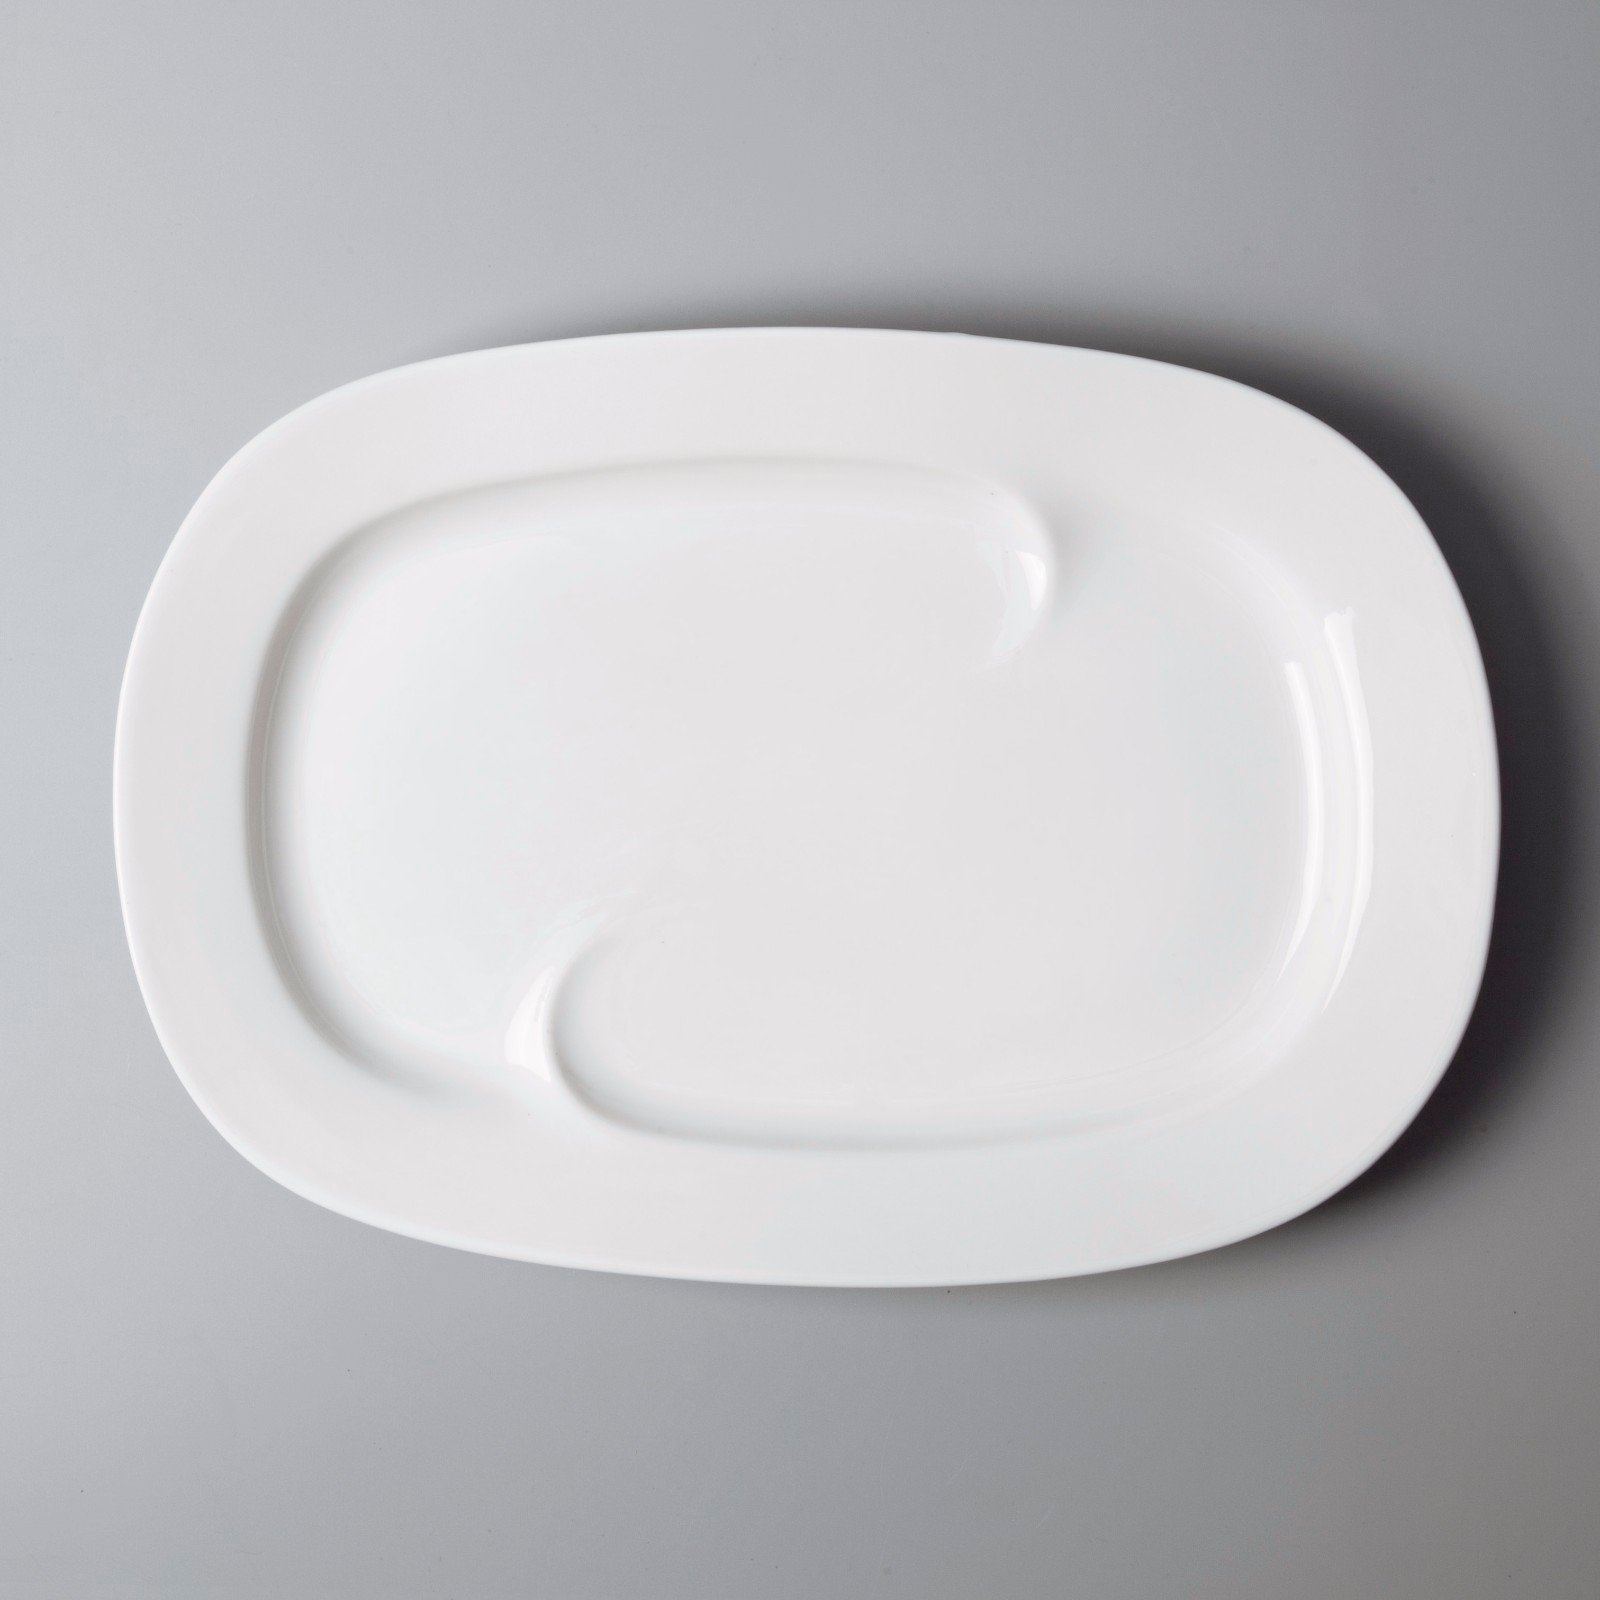 glaze best porcelain dinnerware in the world Italian style manufacturerfor home-4